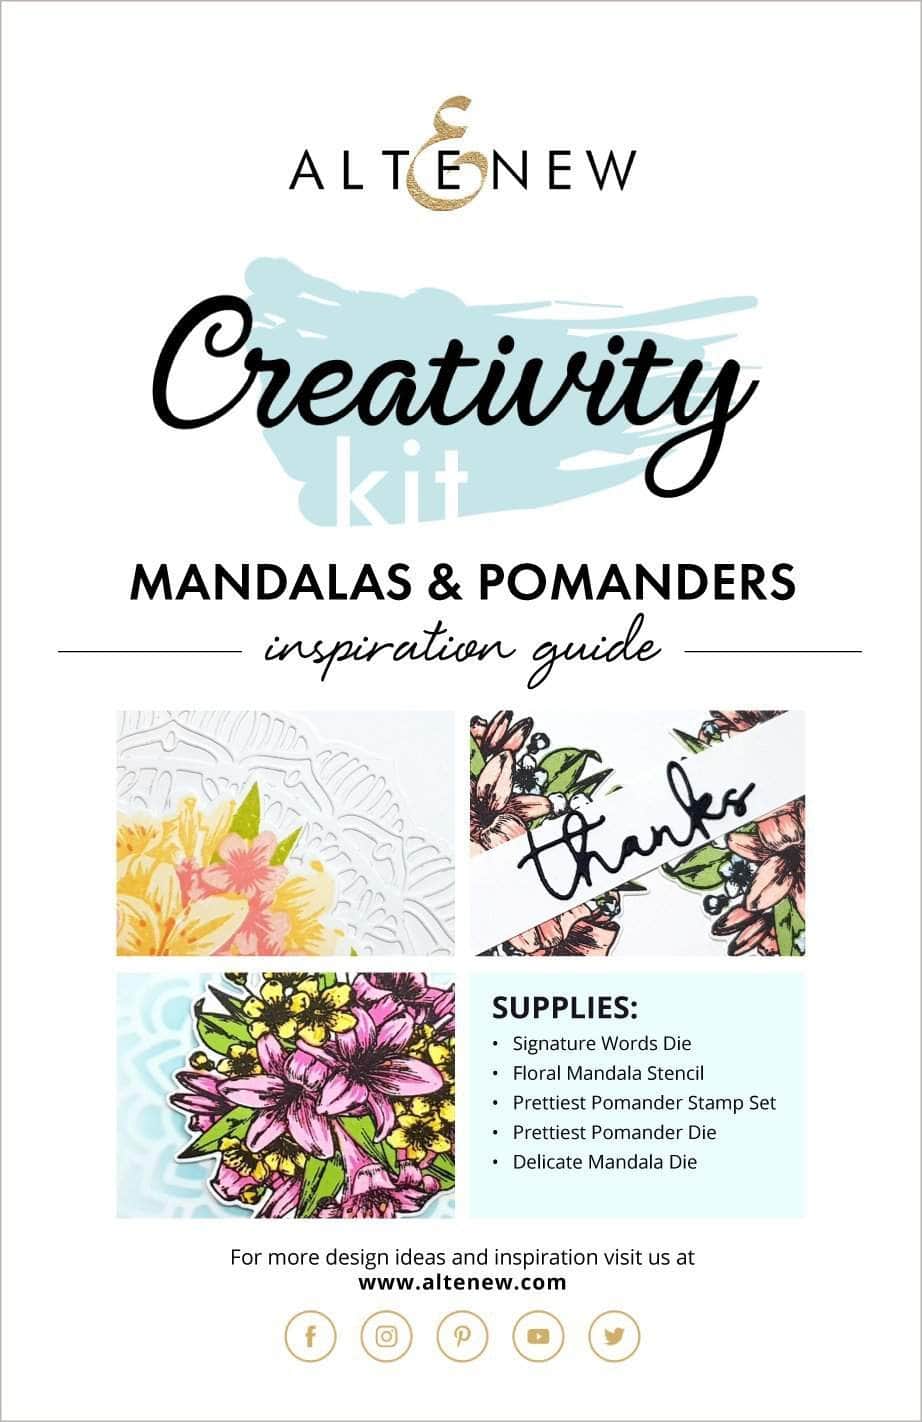 Printed Media Mandalas & Pomanders Creativity Kit Inspiration Guide